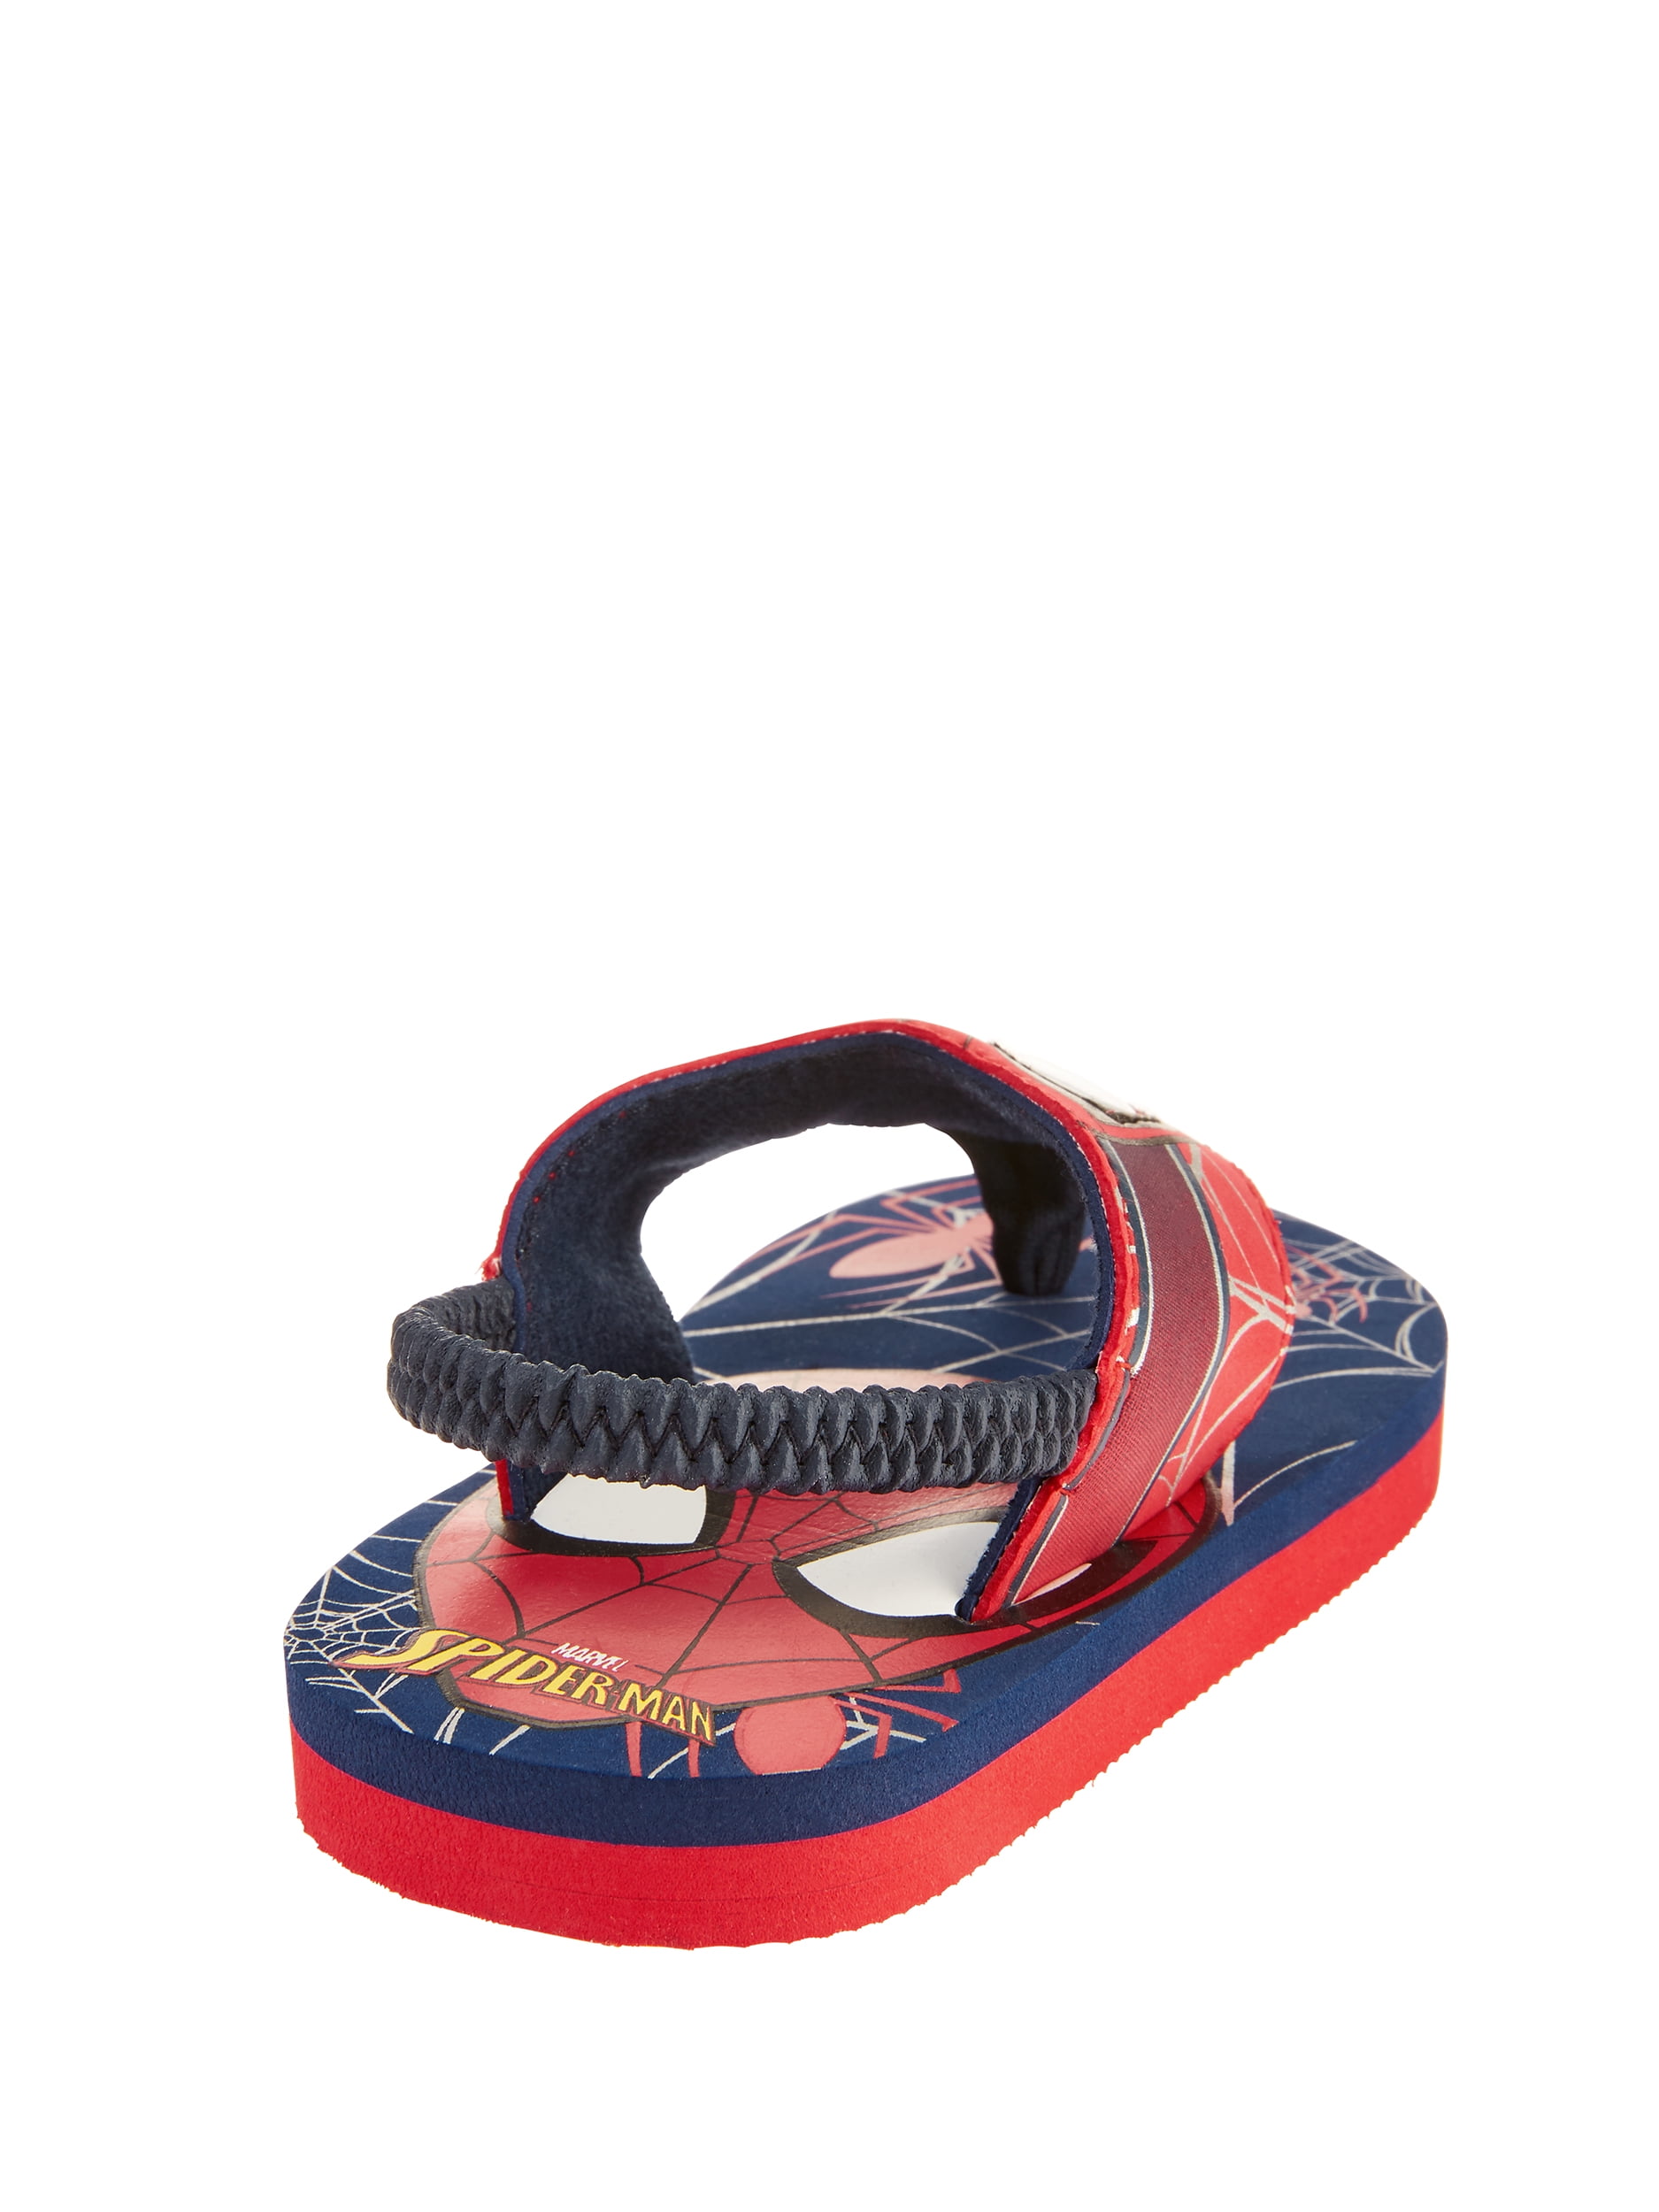 Marvel Spider-man Flip-flops  Slippers Childs Size 7 George